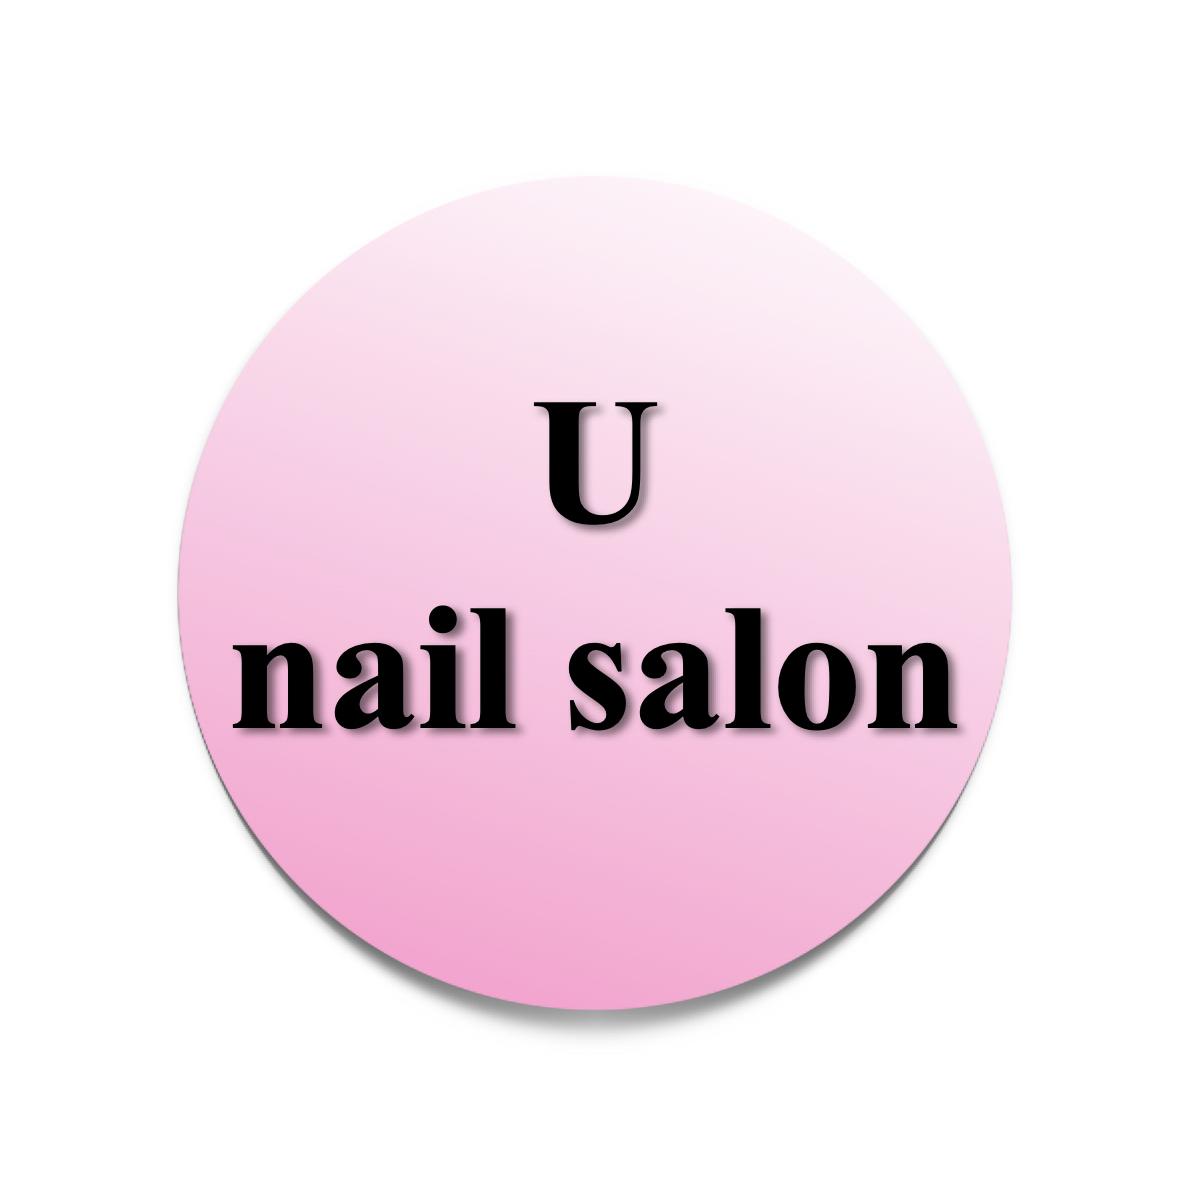 U nail salonの画像